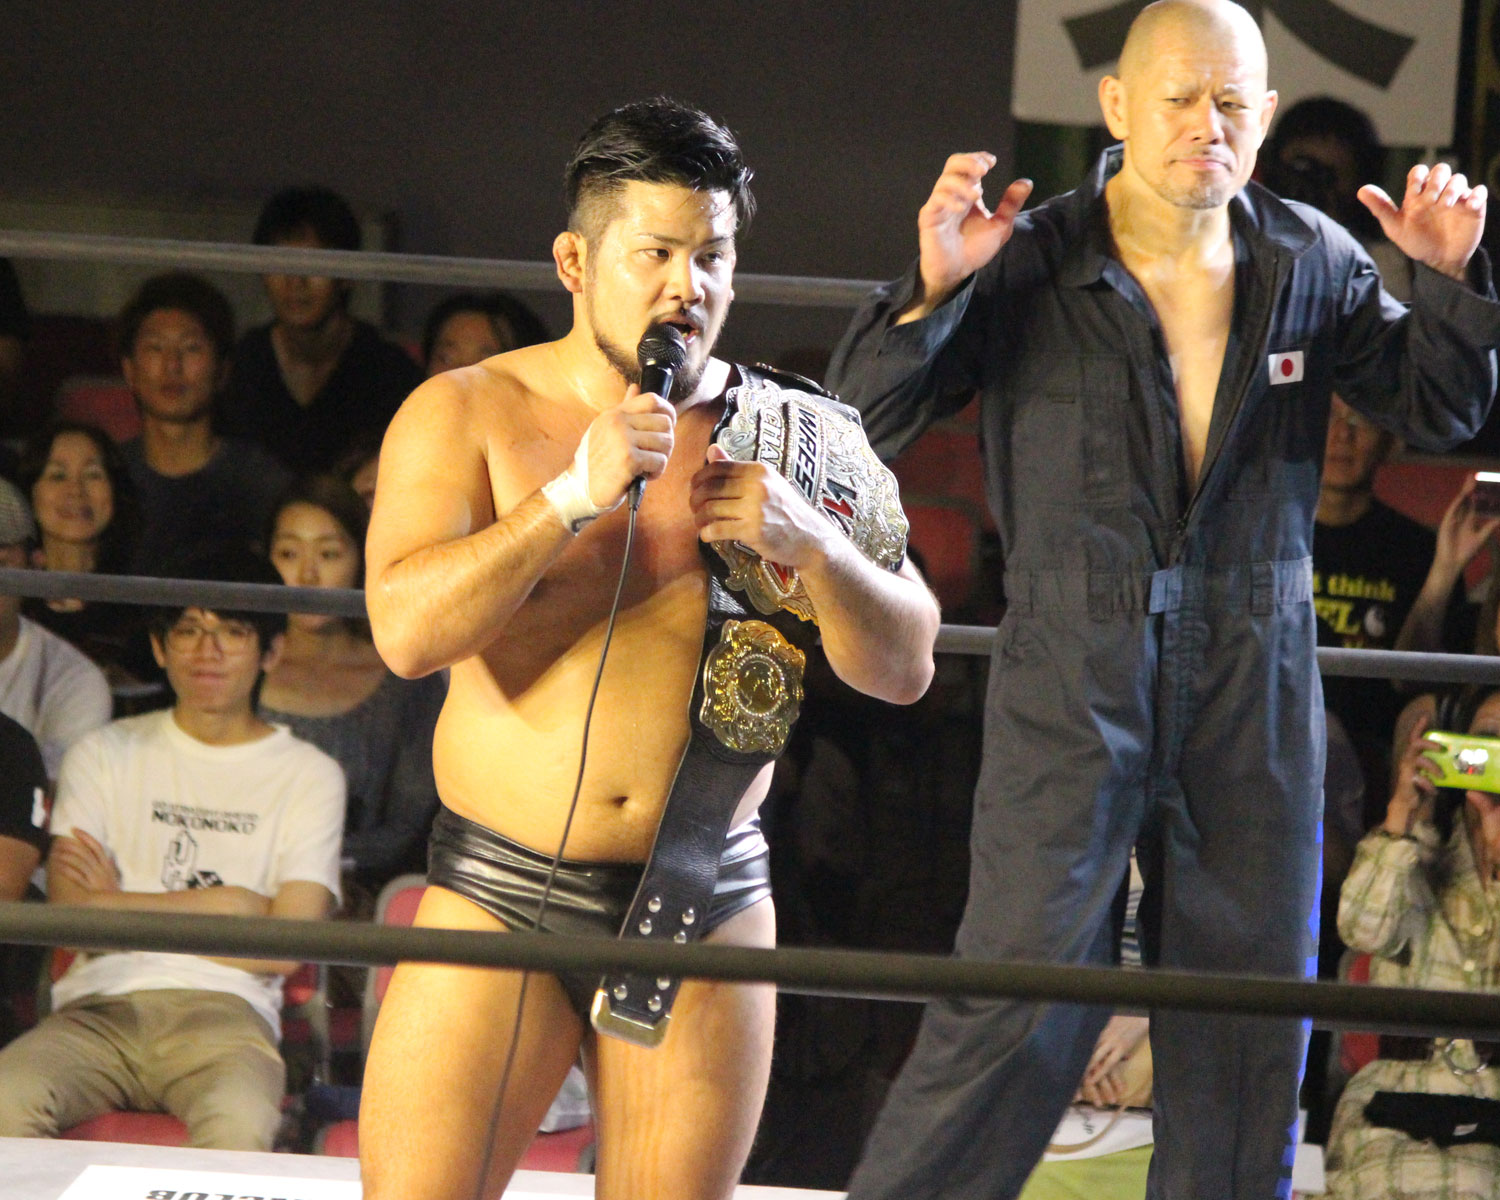 Wrestle 1芦野祥太郎 征矢学からギブアップを奪い返り討ちに 次期挑戦者にはペガソが名乗り 週刊ファイト